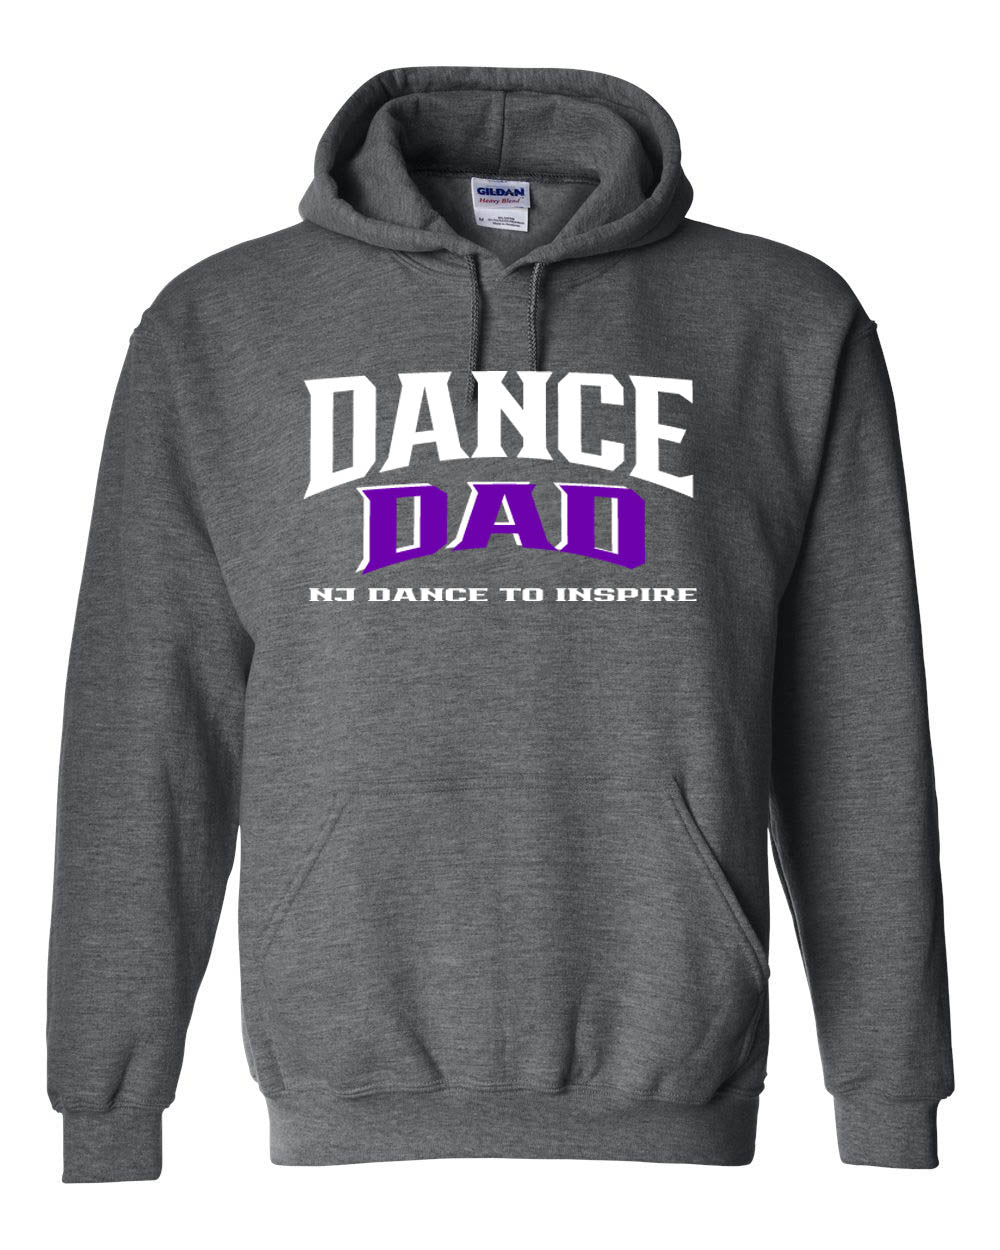 NJ Dance Design 11 Hooded Sweatshirt